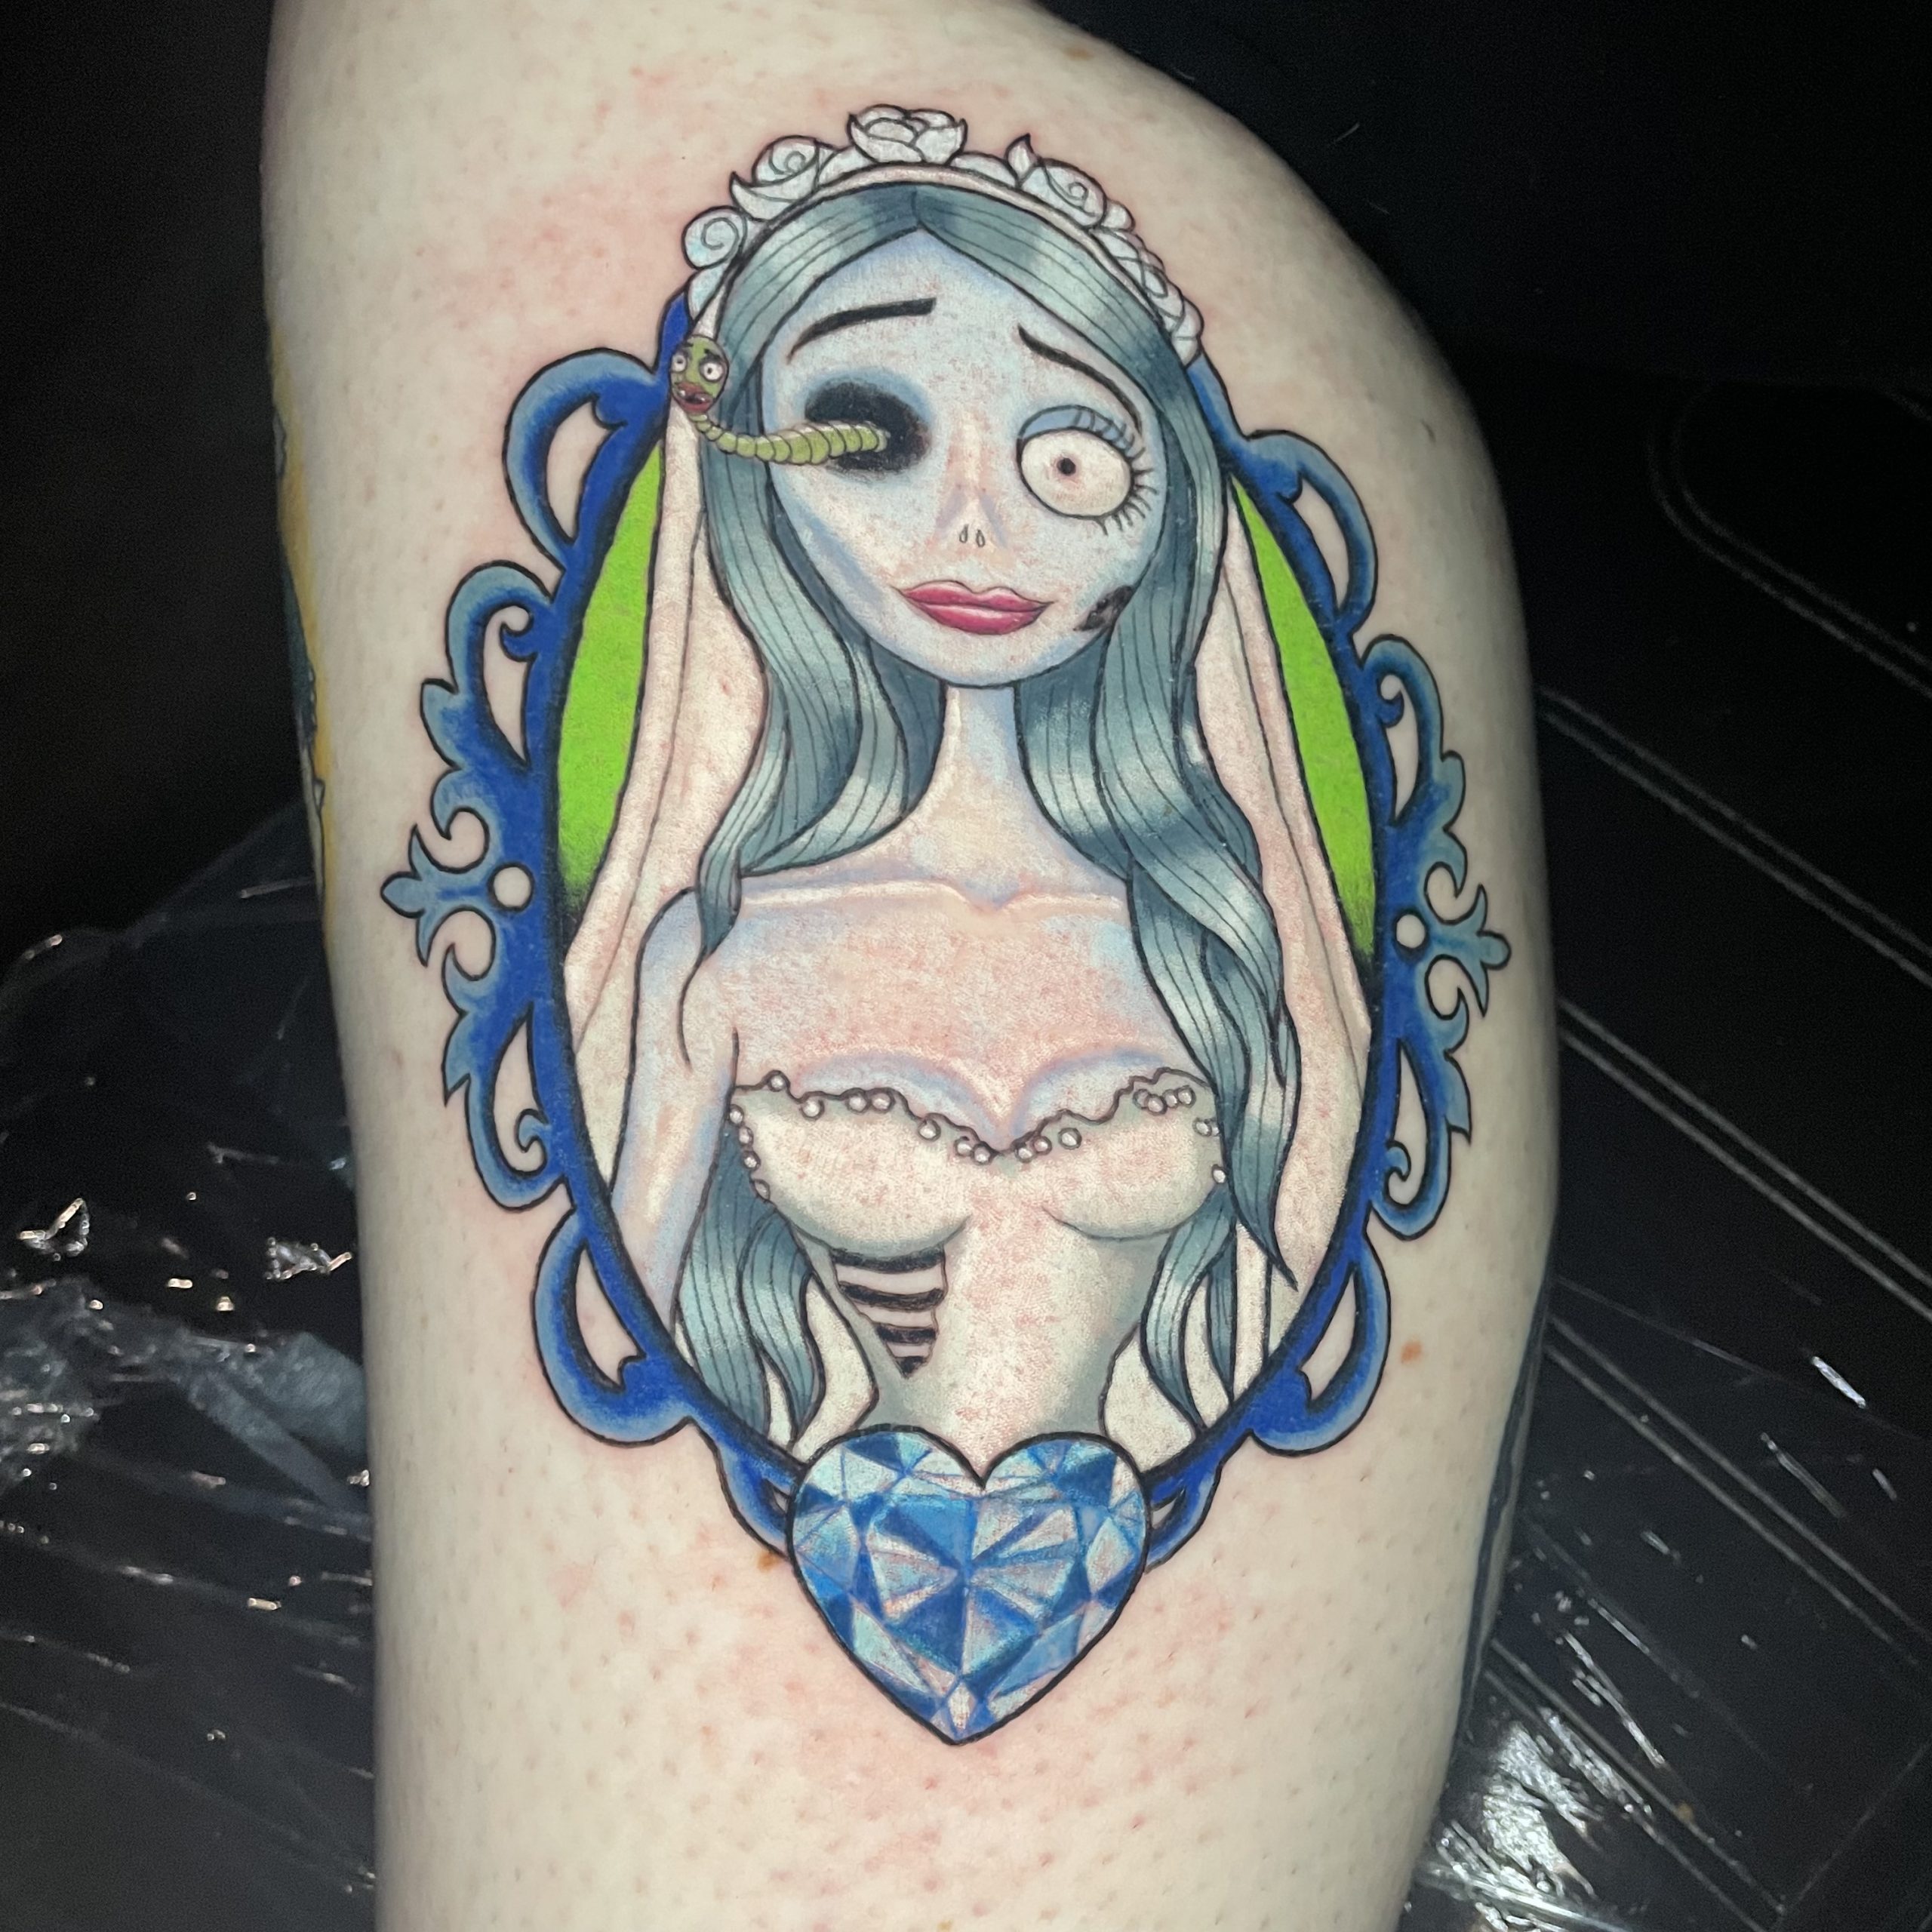 Corpse Bride tattoo